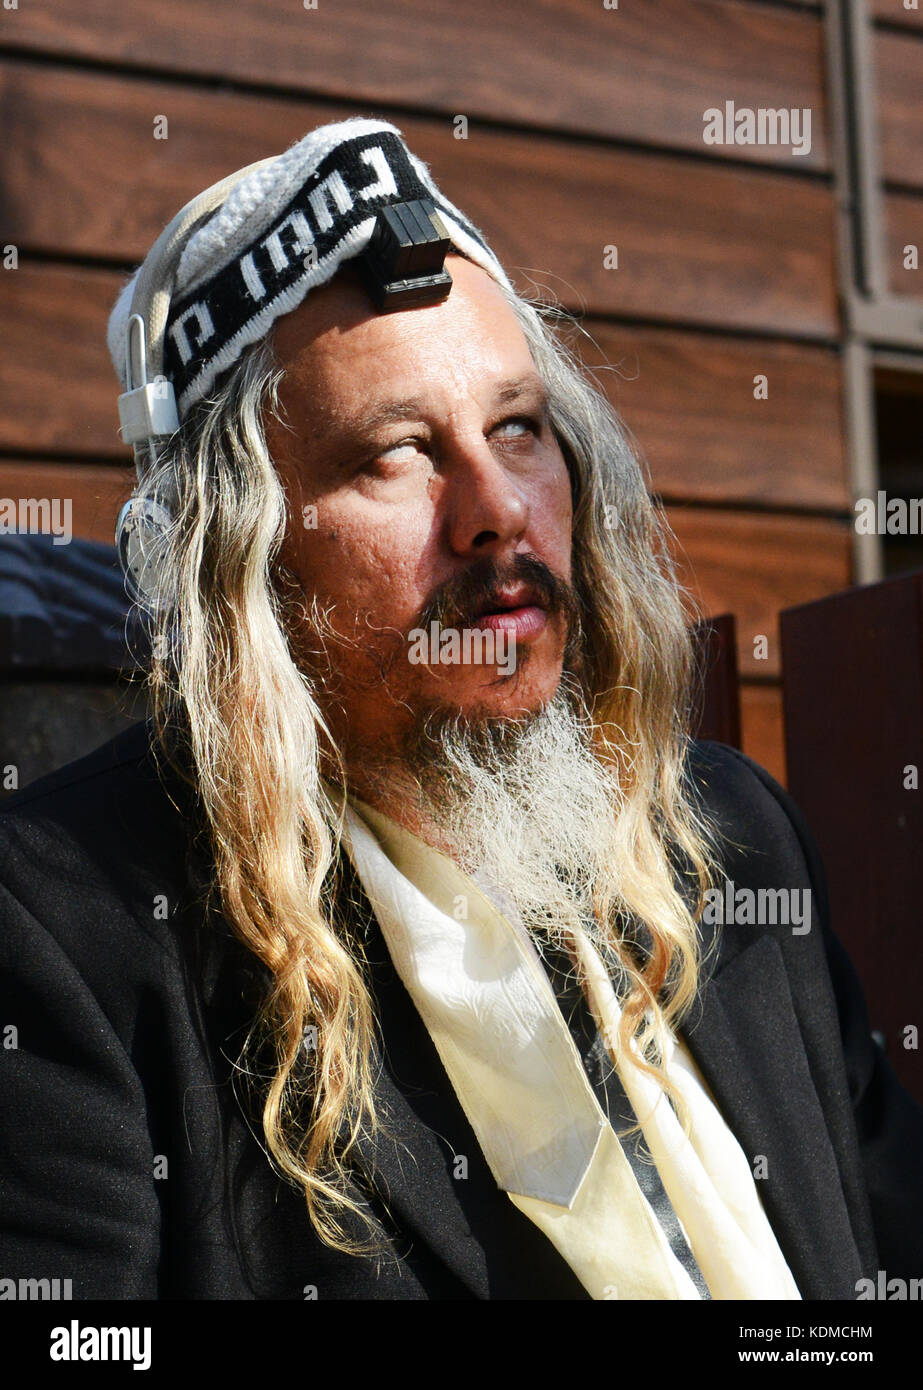 A Breslov Jewish man in the state of trance. Photo taken in Uman, Ukraine. Stock Photo